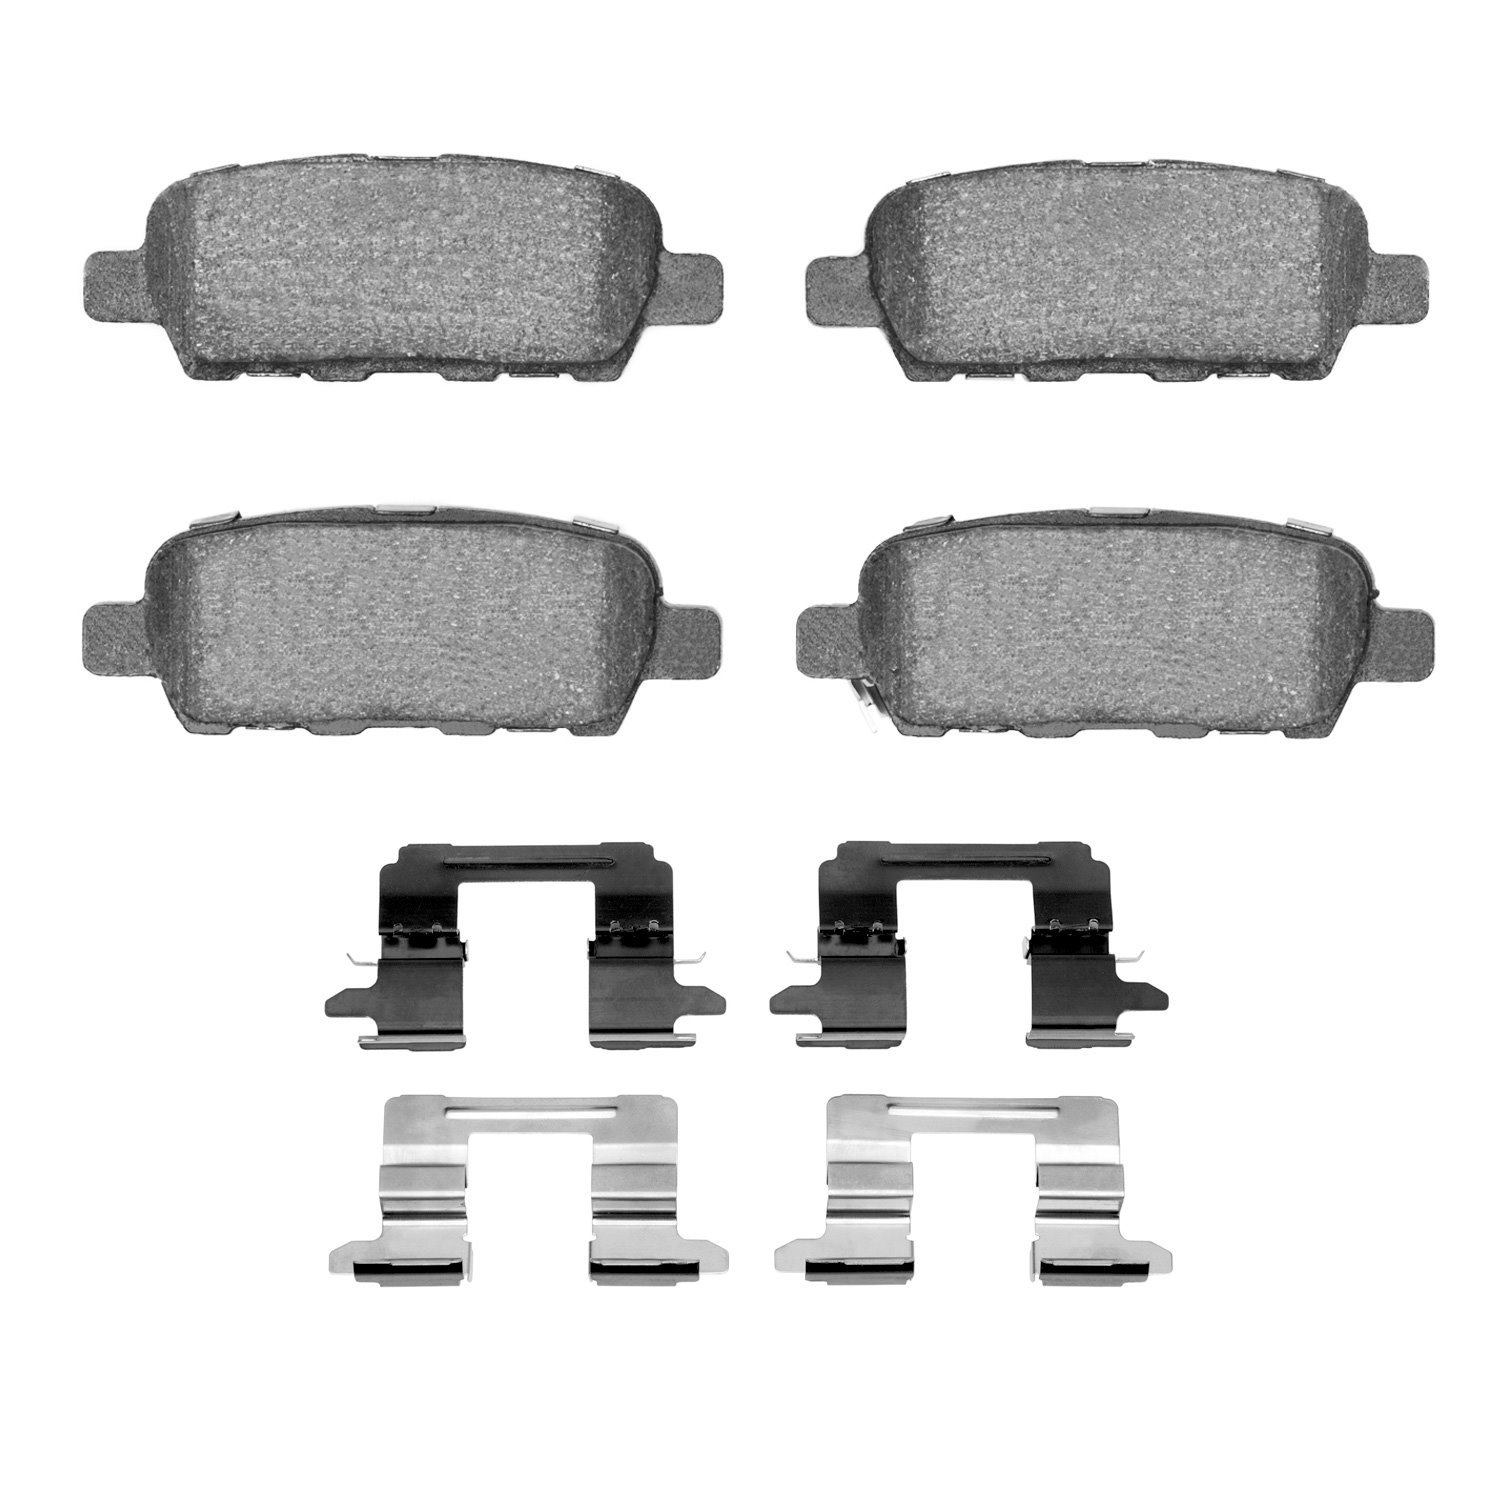 Euro Ceramic Brake Pads & Hardware Kit, Fits Select Fits Multiple Makes/Models, Position: Rear